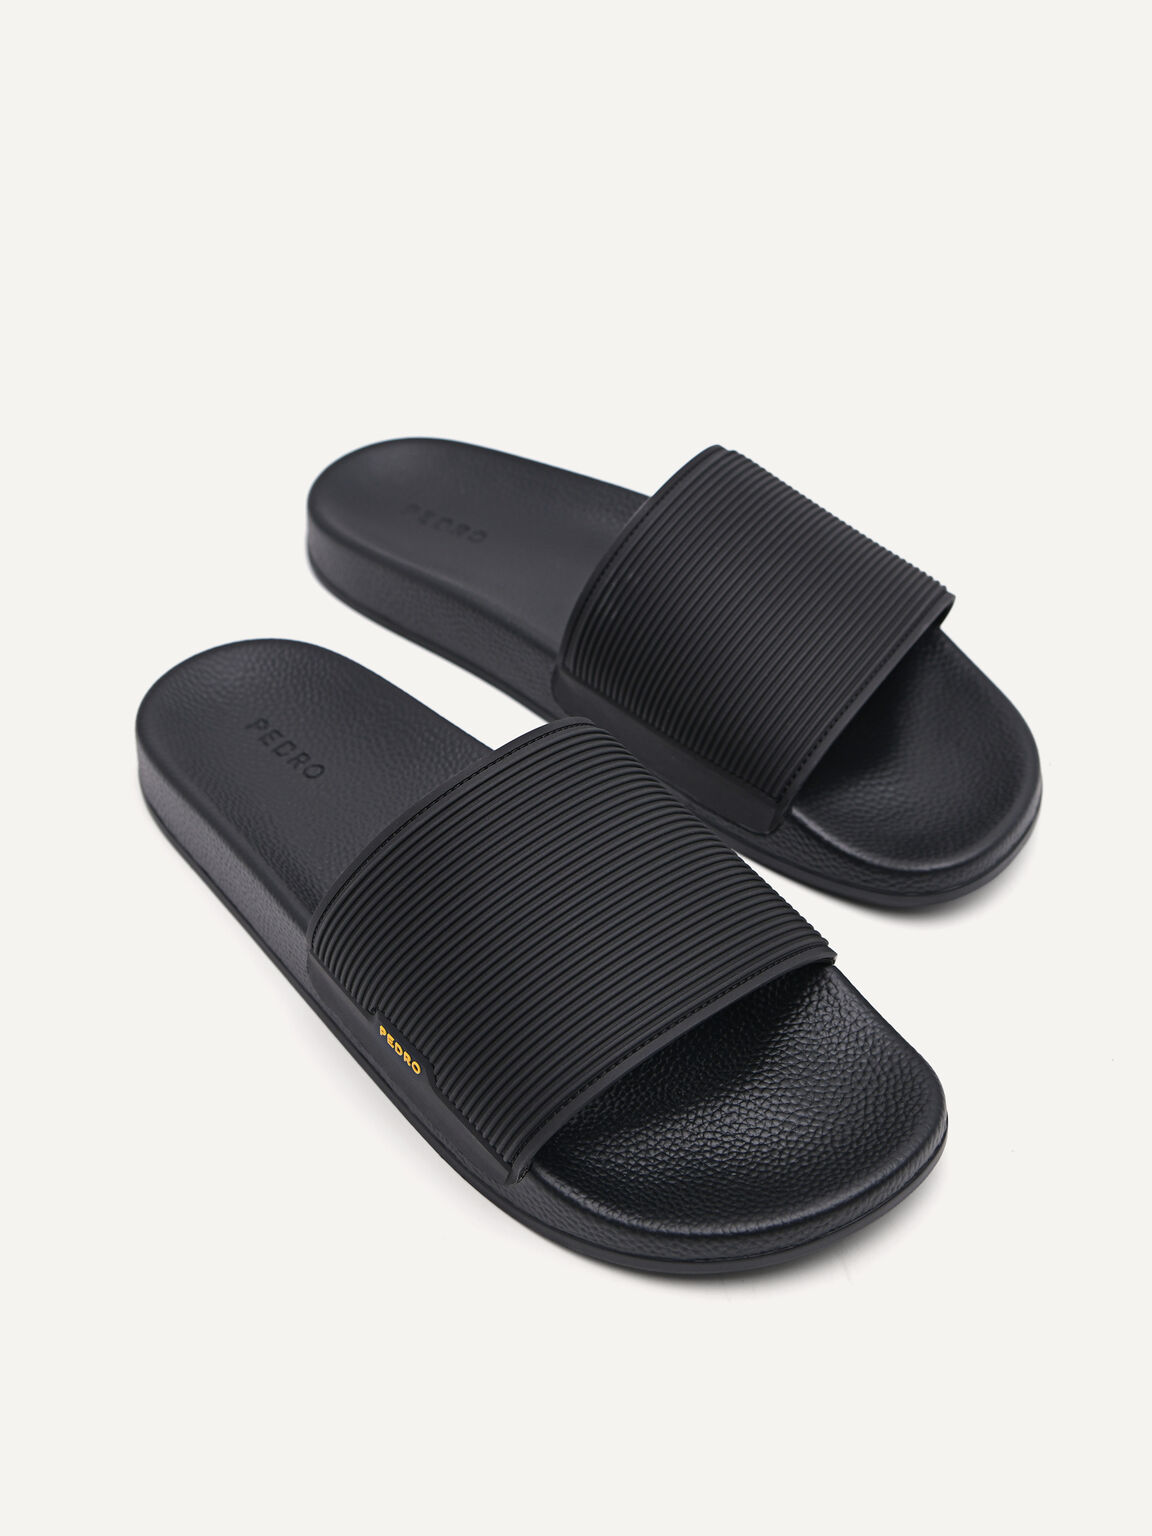 Black Slide Sandals - PEDRO SG